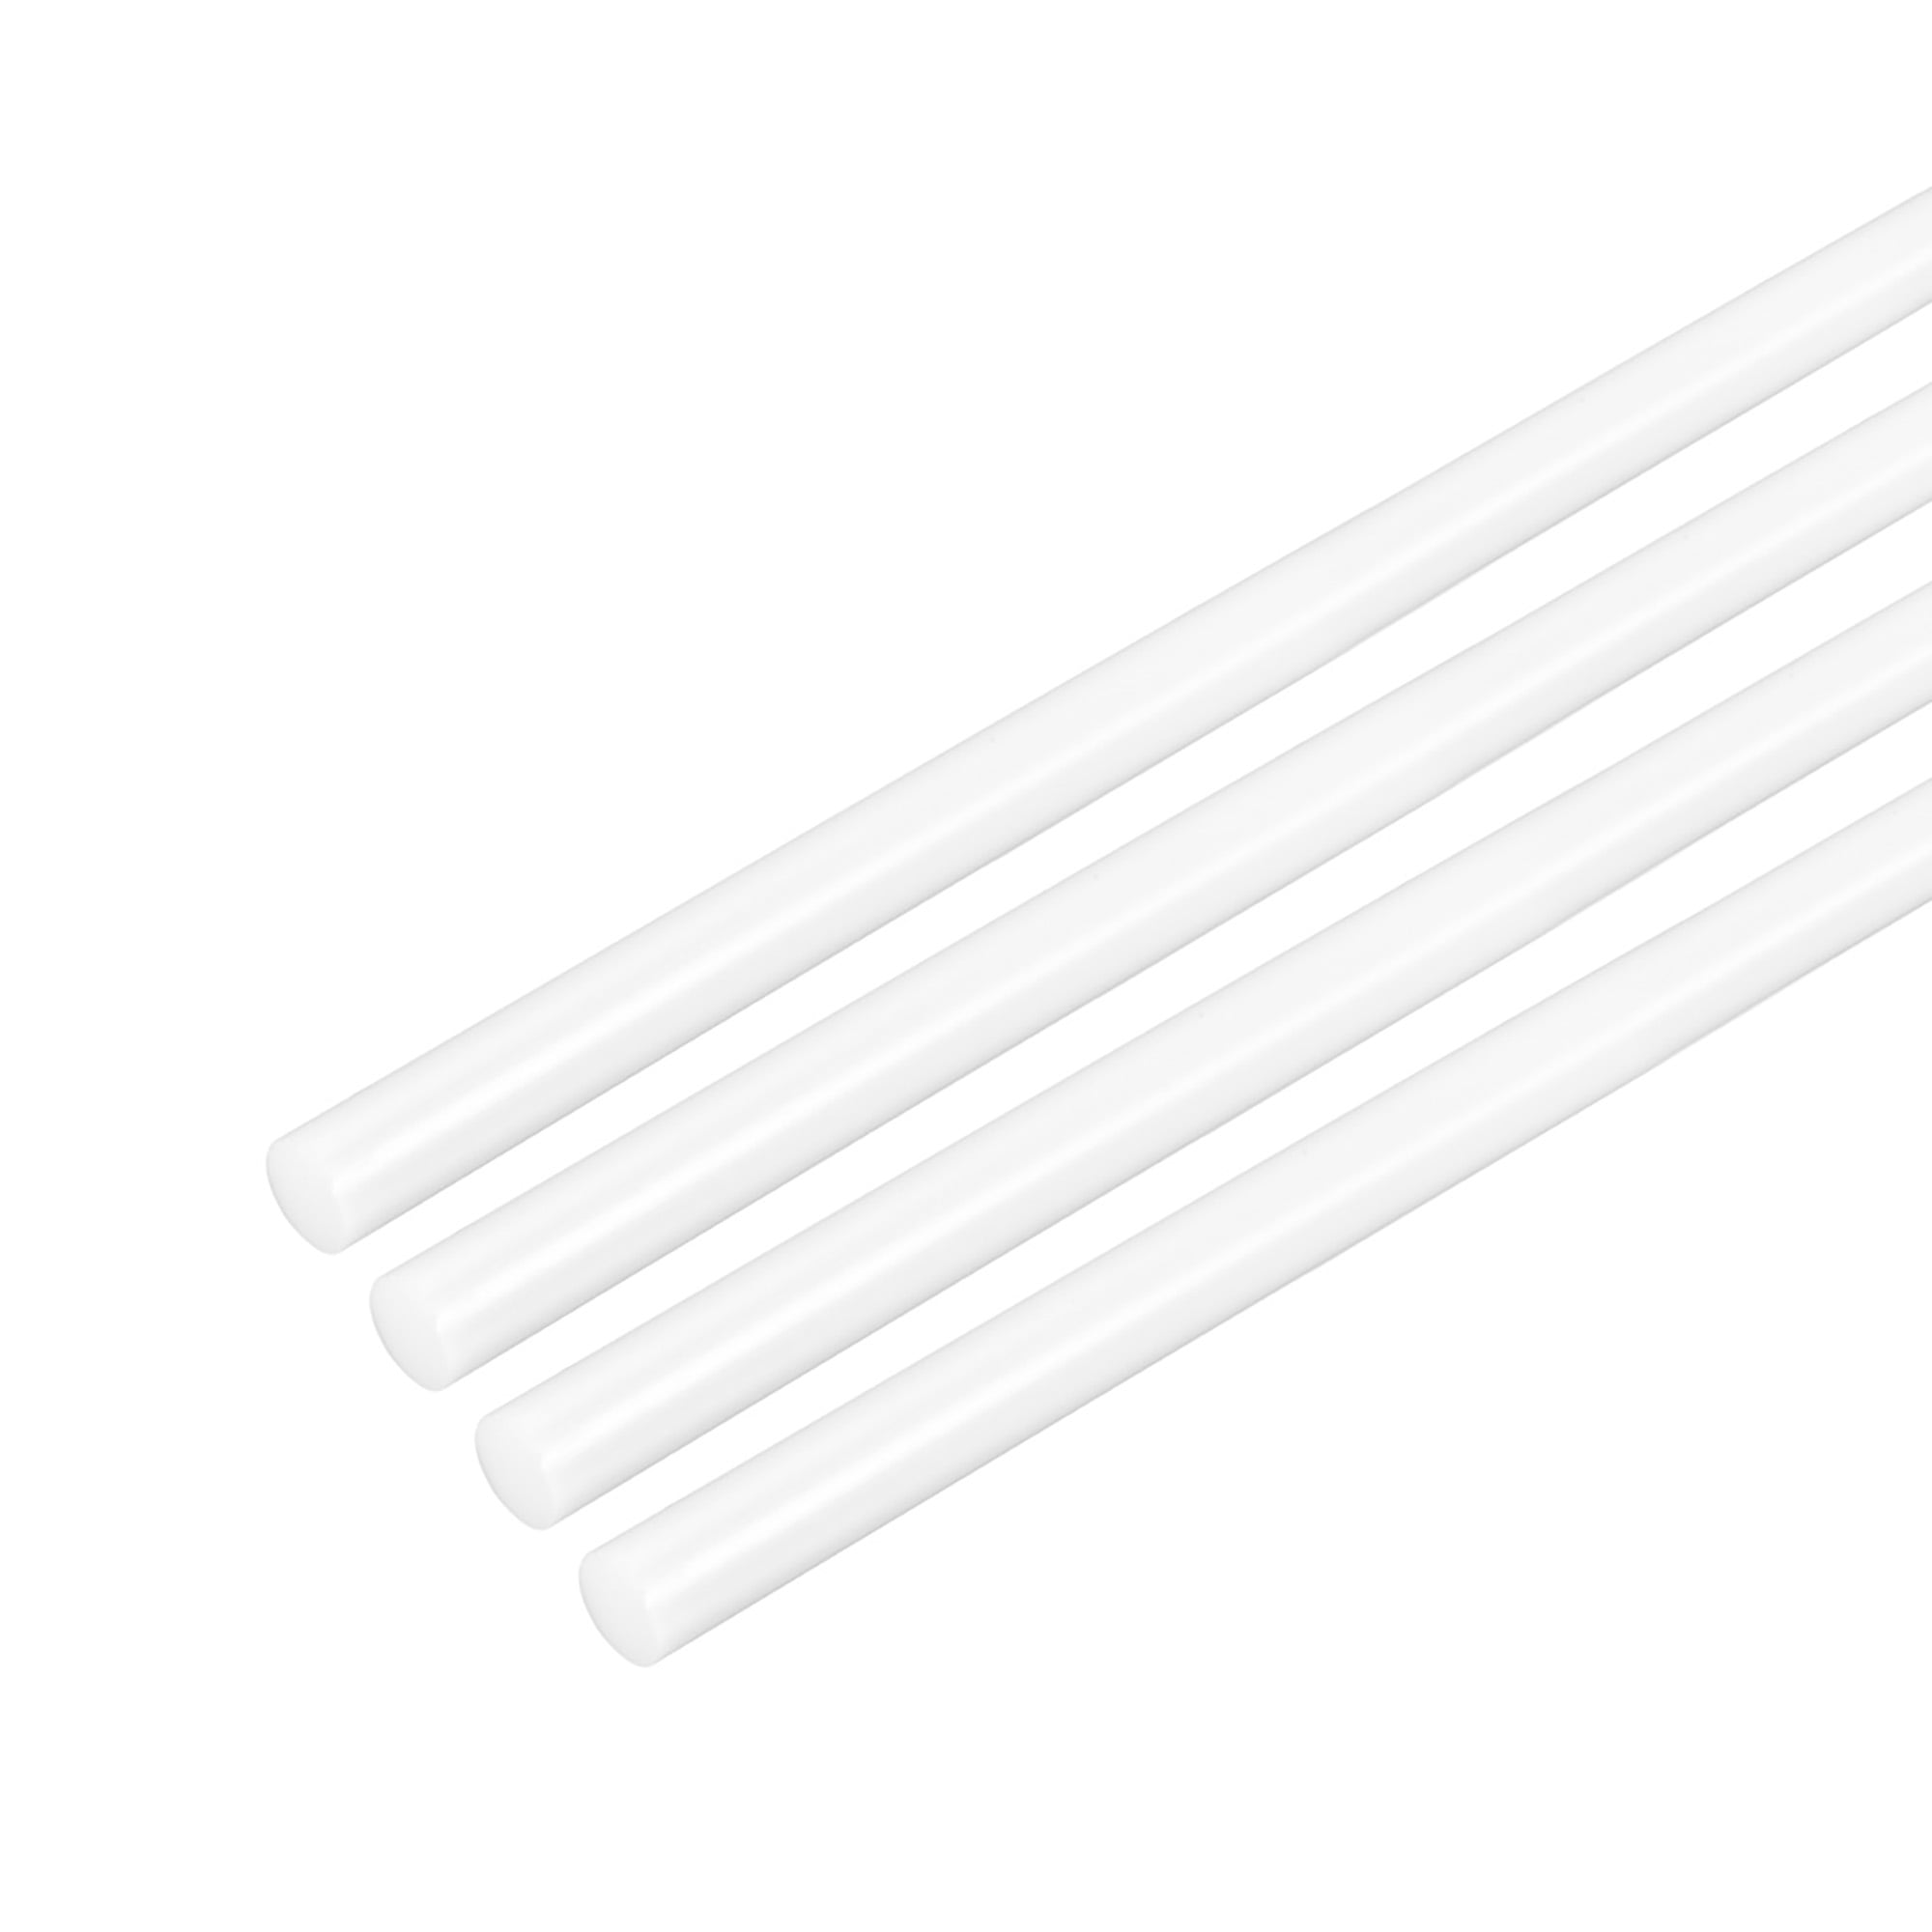 2pcs Round Plastic Rod 1/4 inch Diameter 20 inch Length White POM Polyoxymethylene rods Engineering Plastic Round rods 